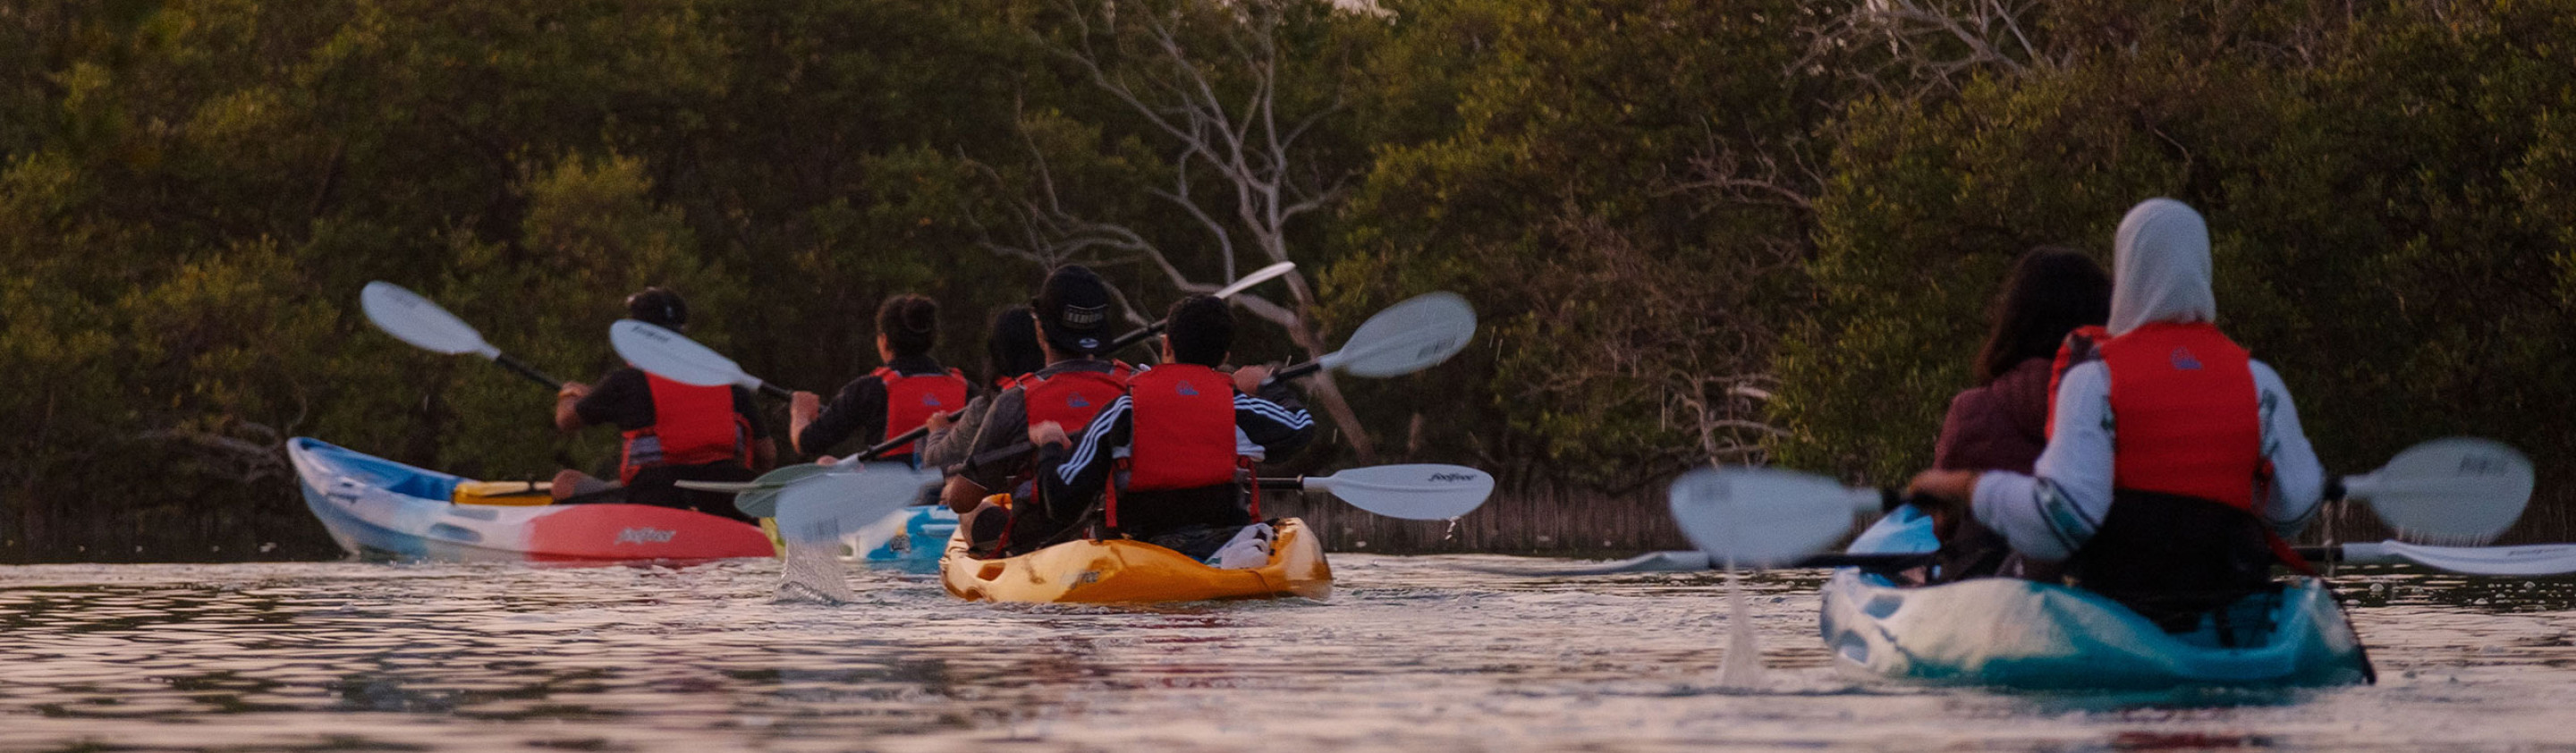 Sunset Kayaking Eastern Mangroves National Park Abu Dhabi UAE